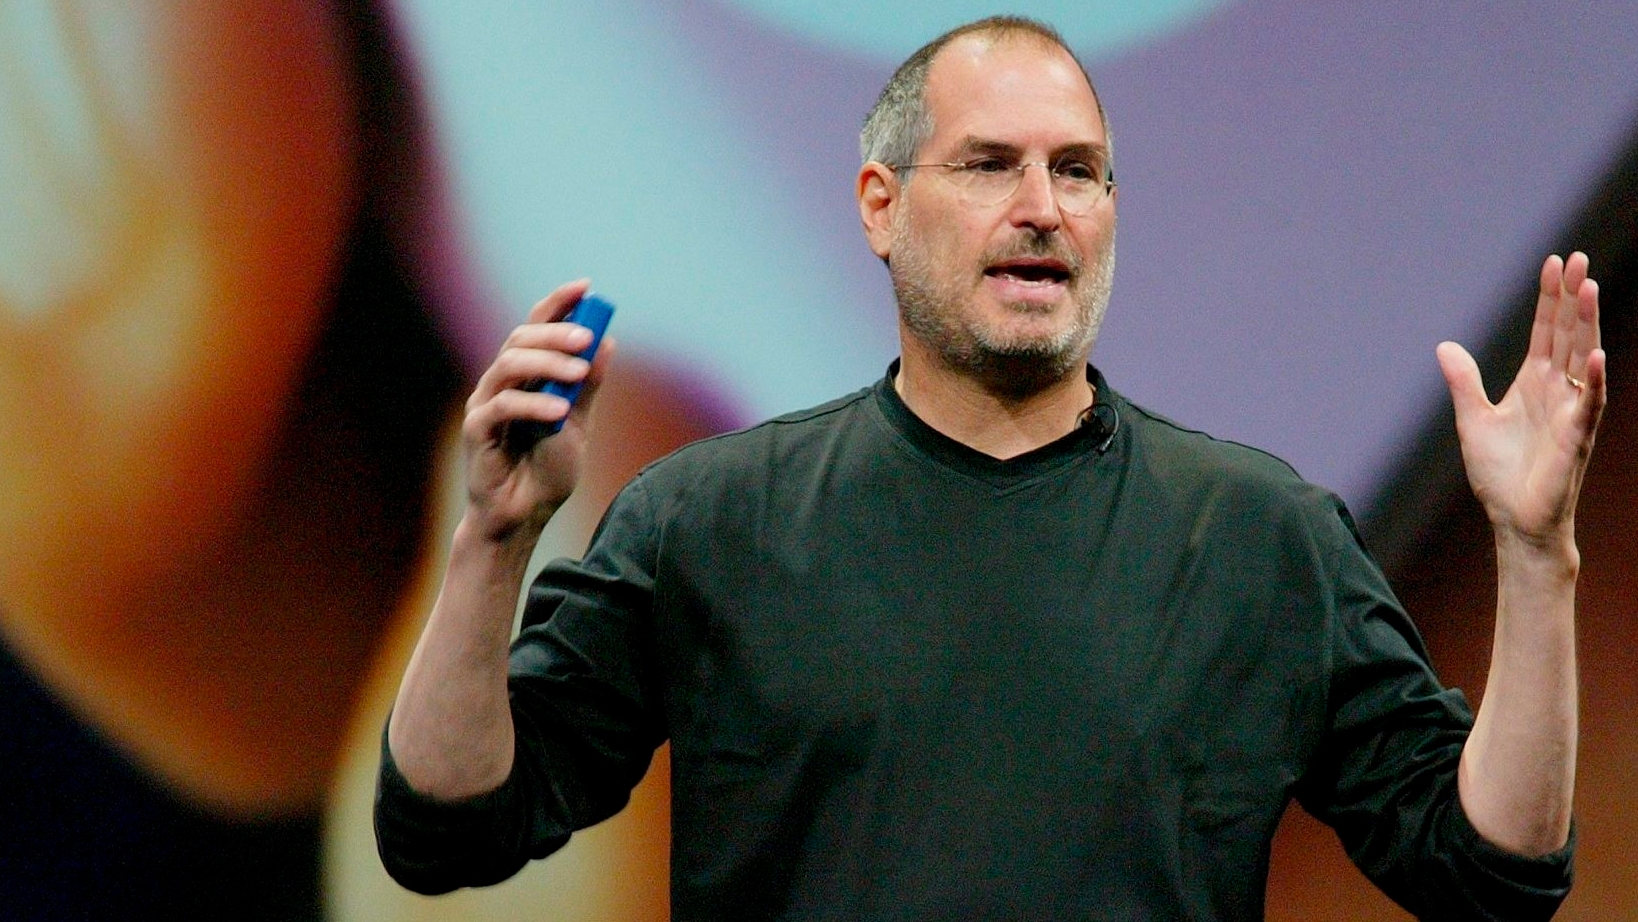 Steve Jobs, el fallecido fundador de Apple (EPA/MONICA M. DAVEY)
